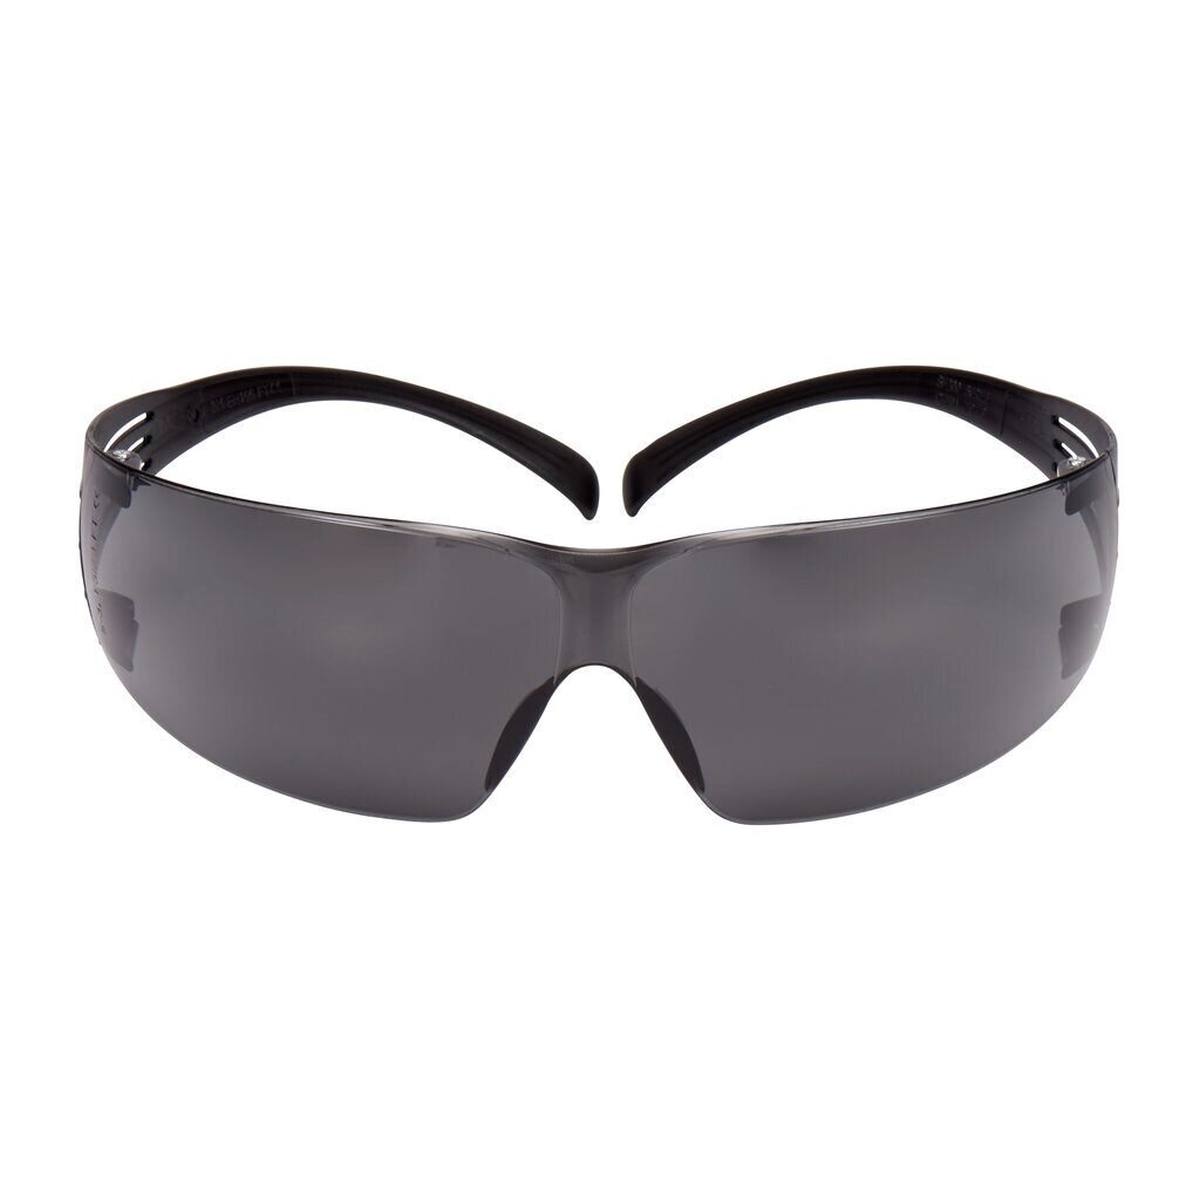 3M SecureFit 200 Schutzbrille, Antikratz-/Anti-Fog-Beschichtung, graue Scheibe, SF202AS/AF-EU